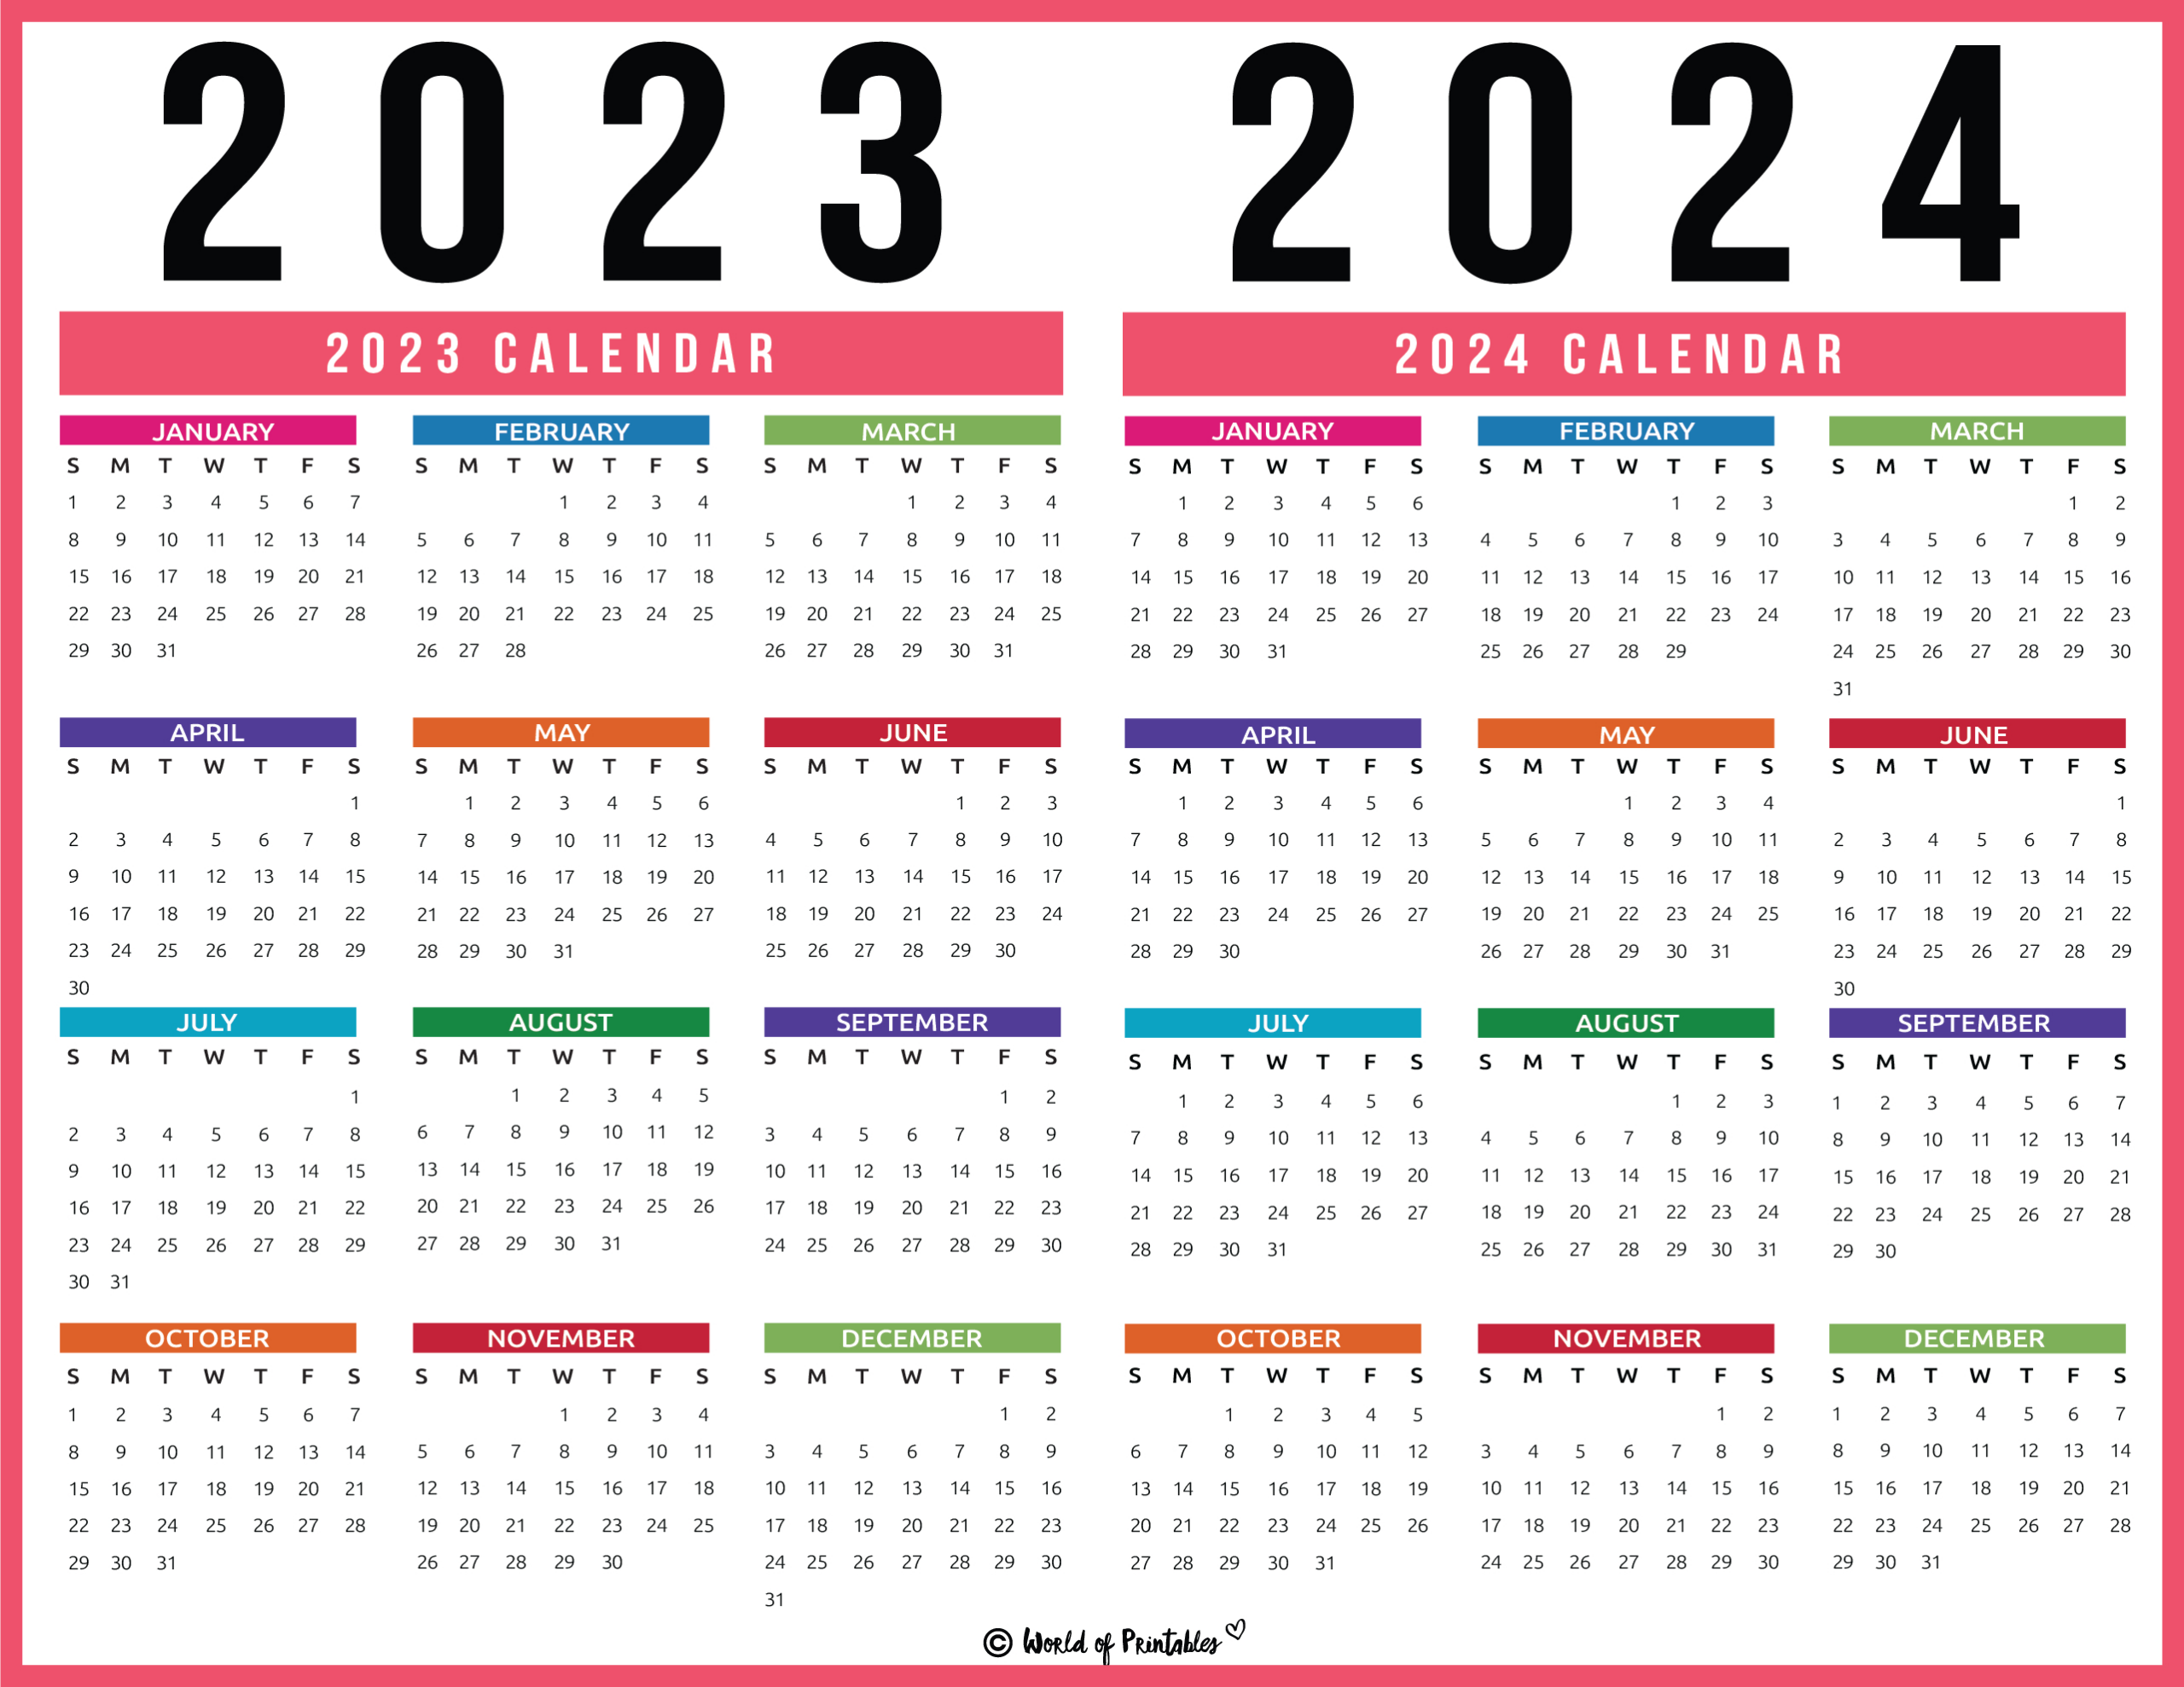 2023 2024 Calendar Free Printables - World Of Printables | 2023 Calendar 2024 Printable PDF Free